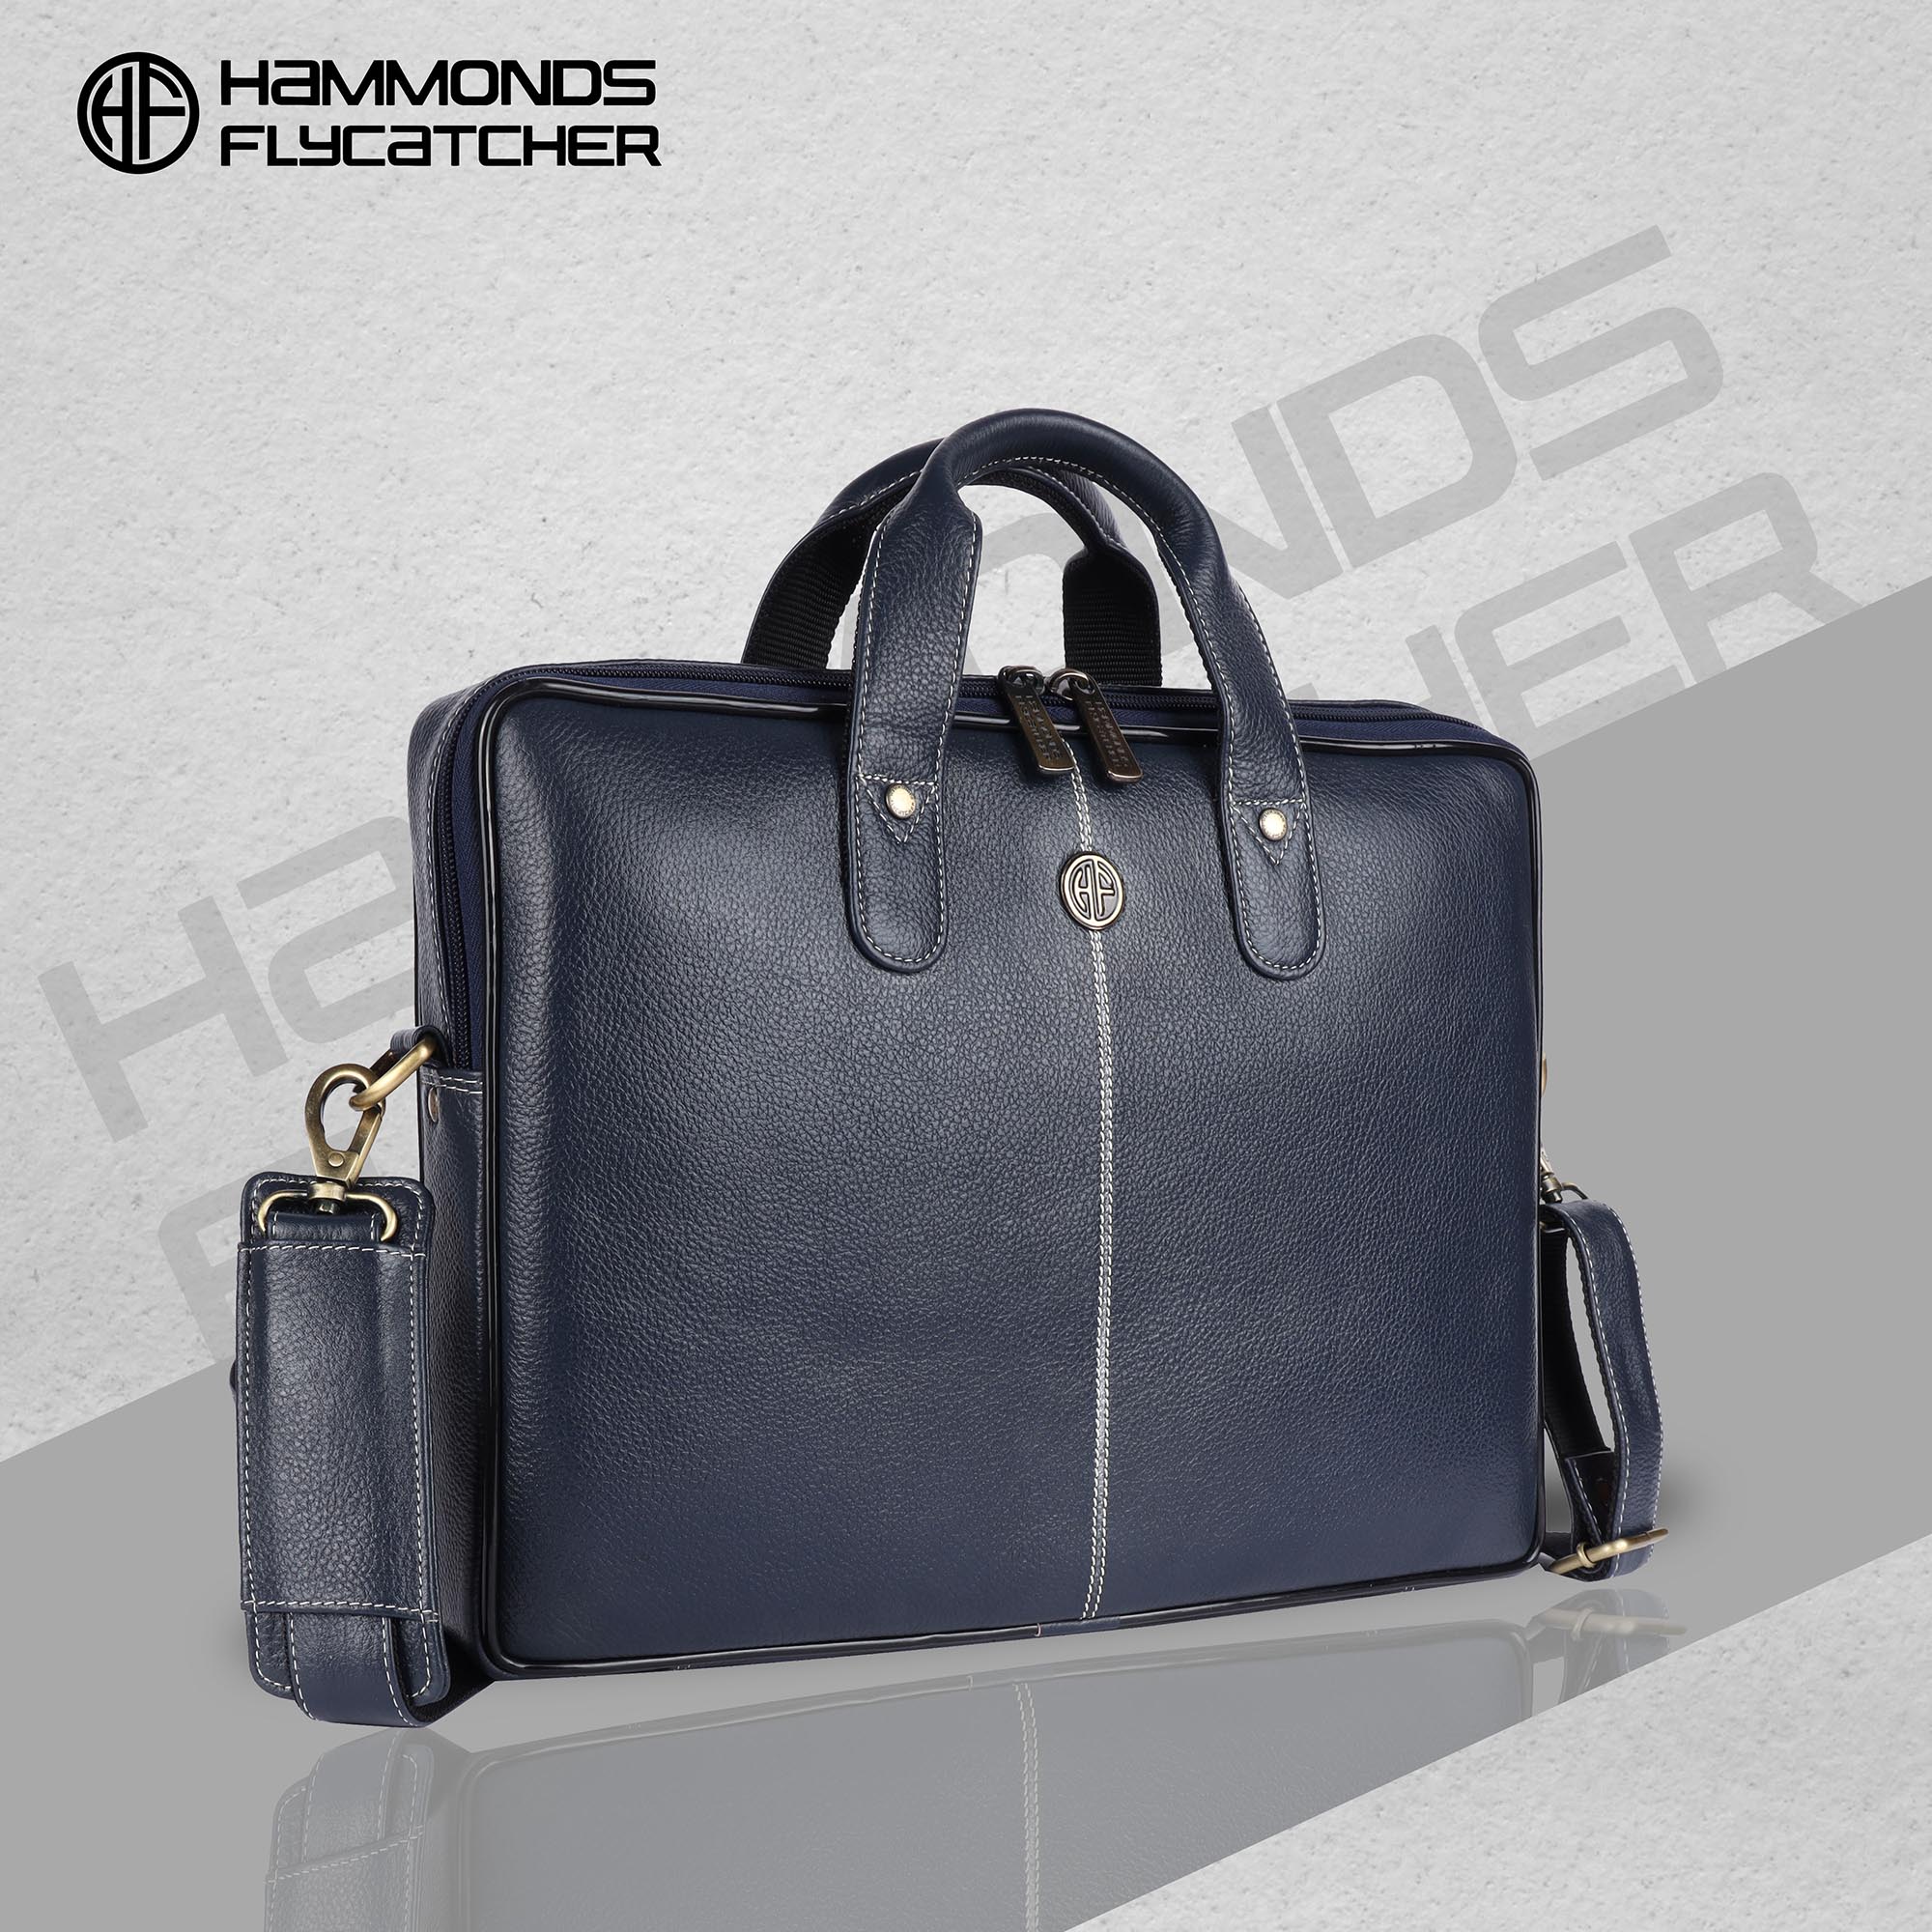 Office Bag for Men - Genuine Leather Laptop Bag - Fits Upto 14 Inch Laptop Bag/MacBook - 1 Year Warranty